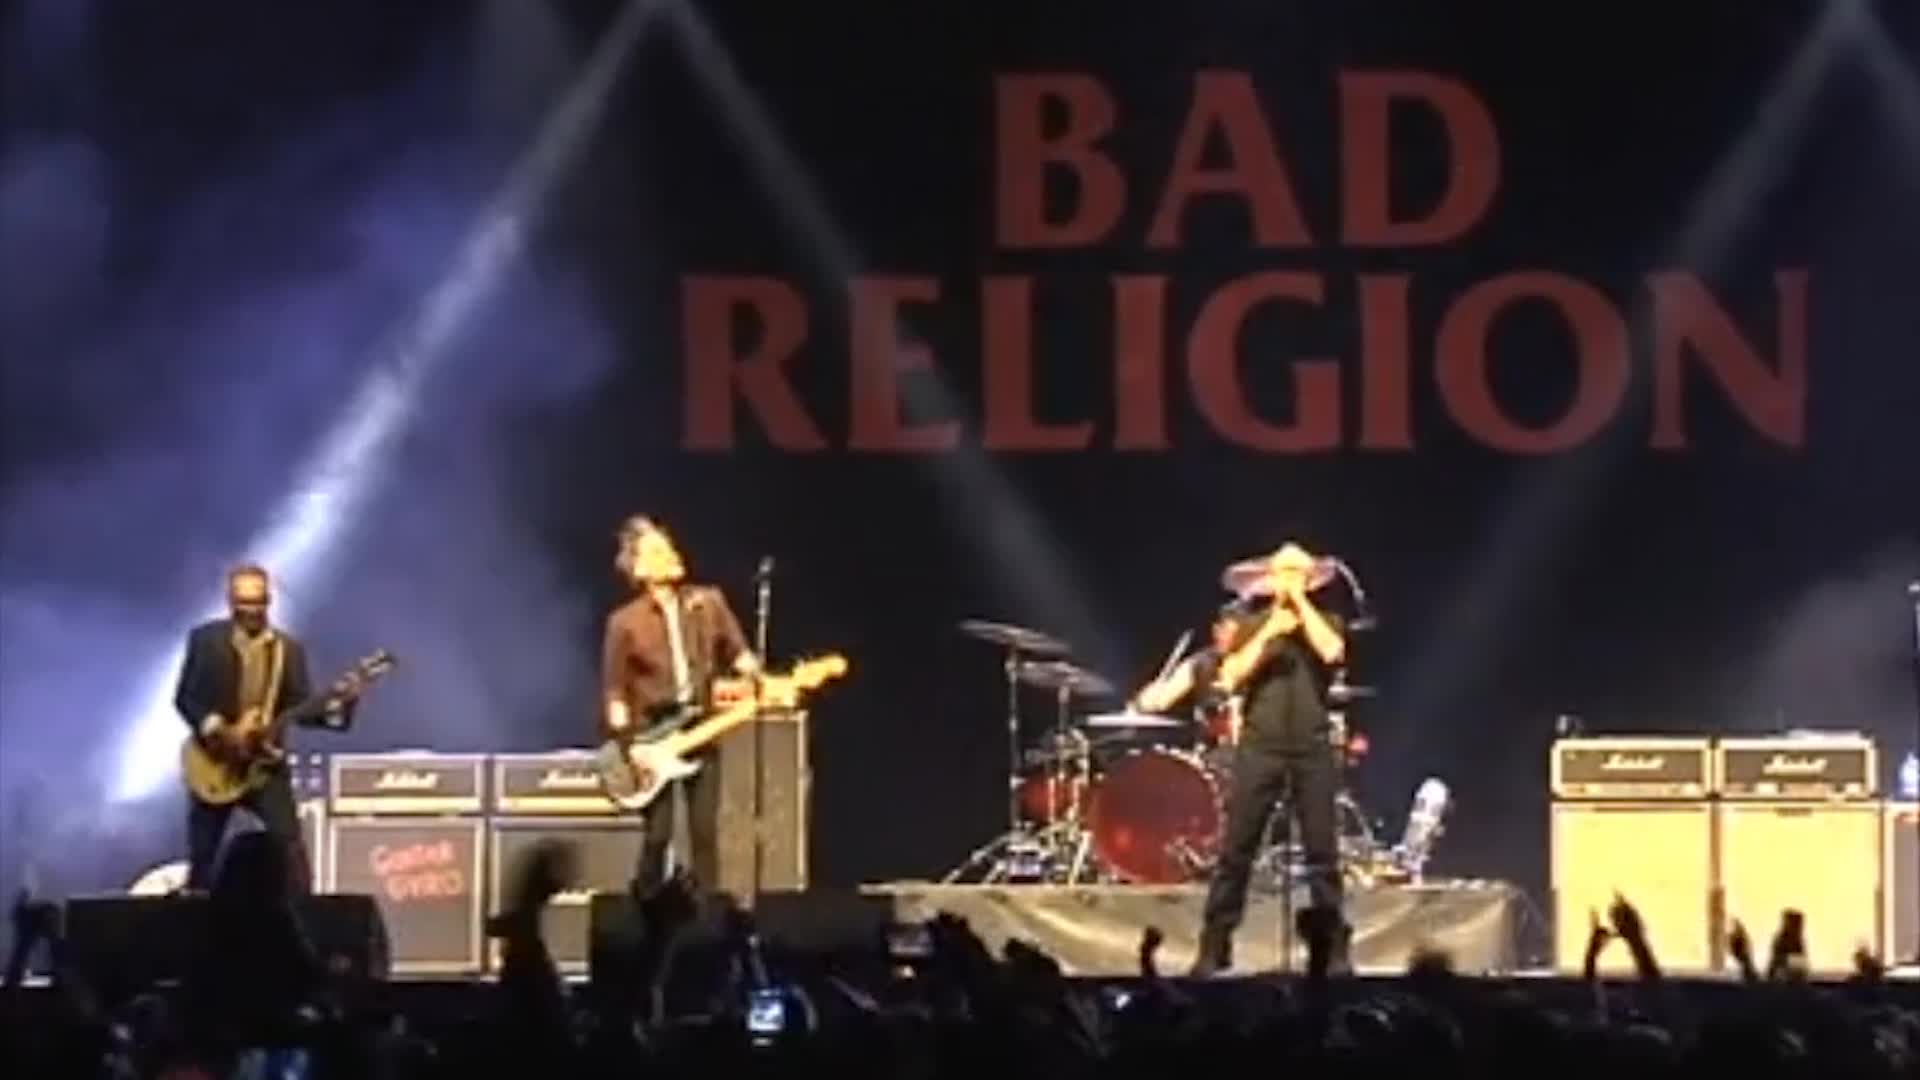 Bad Religion musika talde kaliforniarrak Barakaldoko BECen jo du